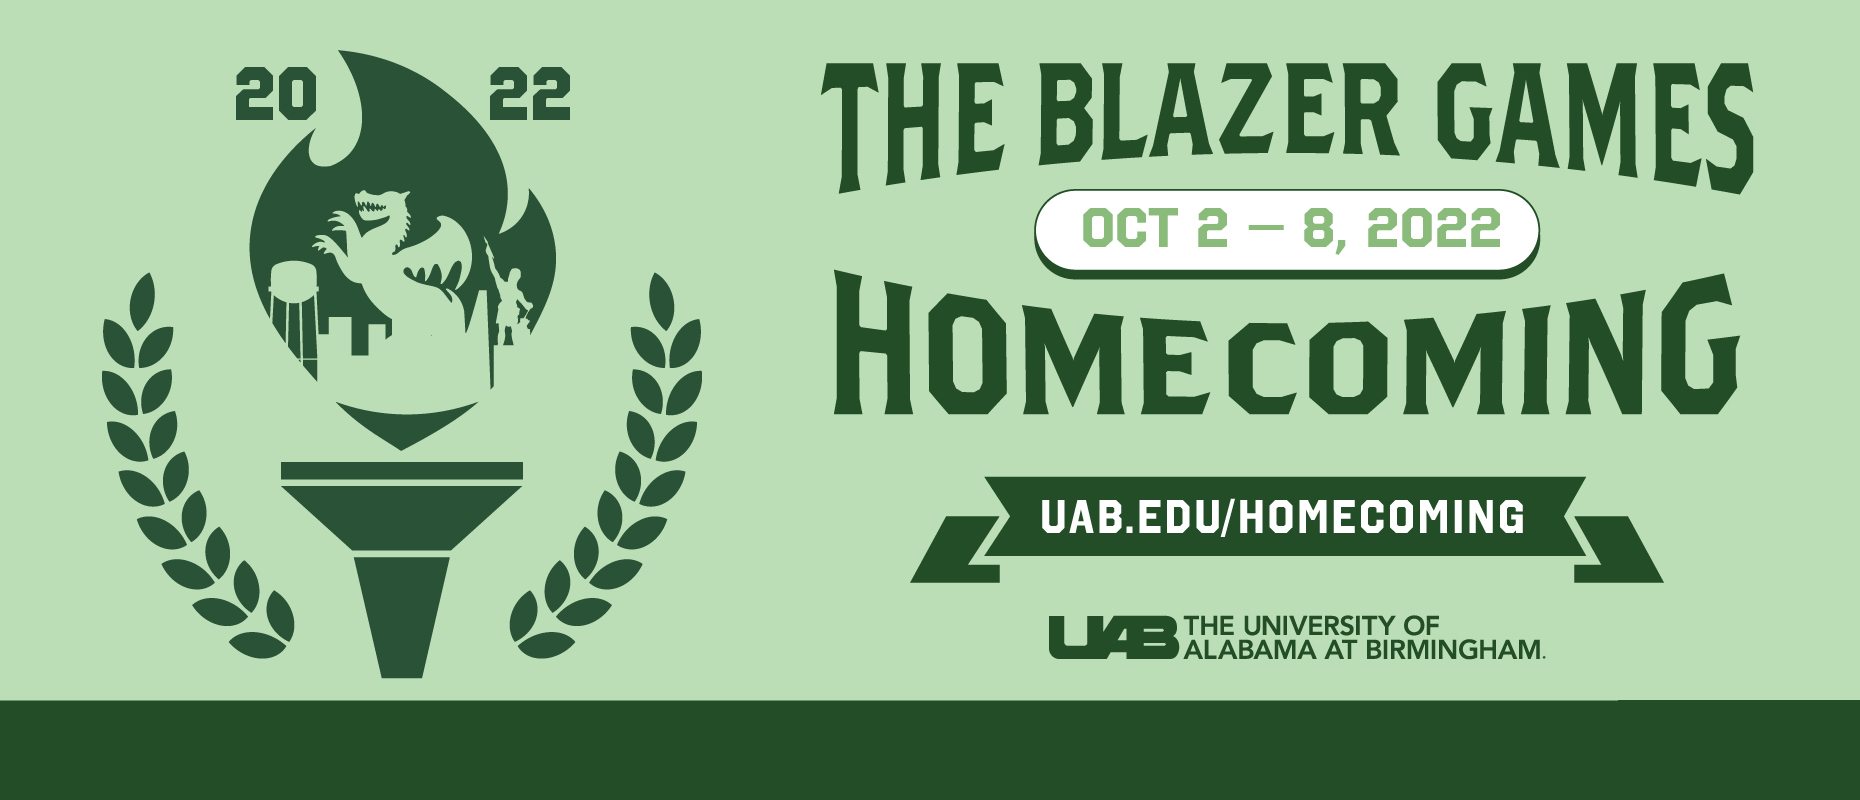 The Blazer Games: Homecoming week October 2-8, 2022